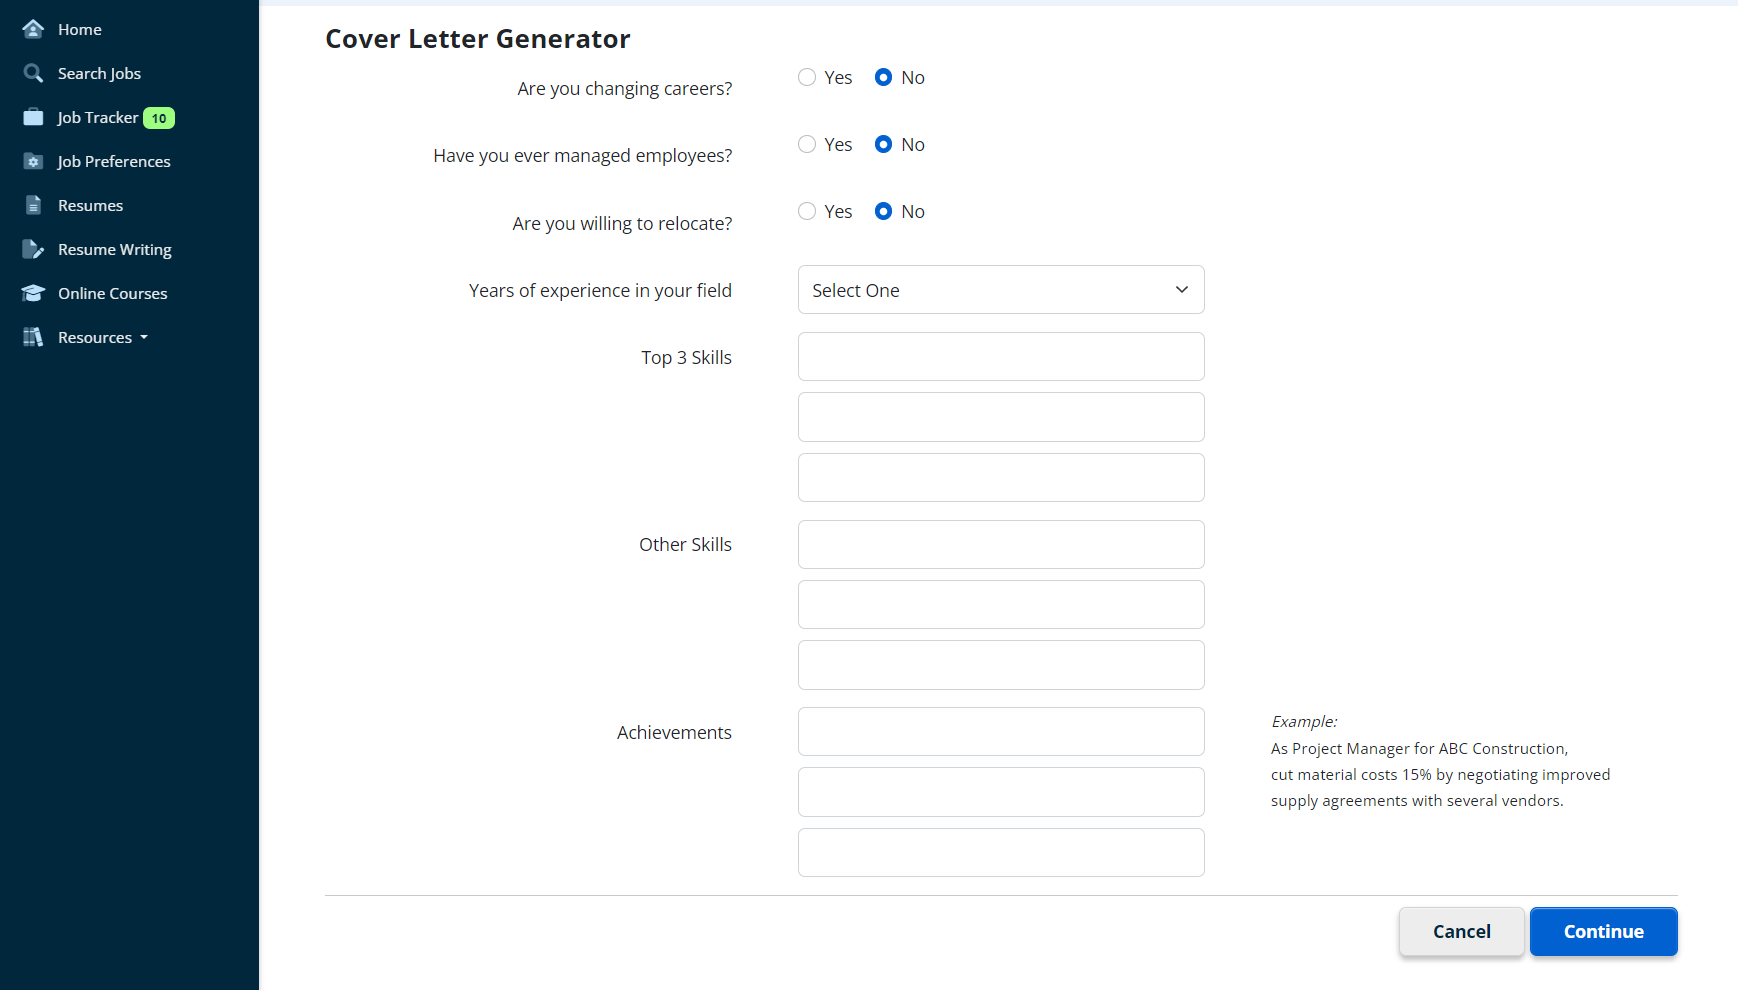 Cover letter generator questionnaire screenshot